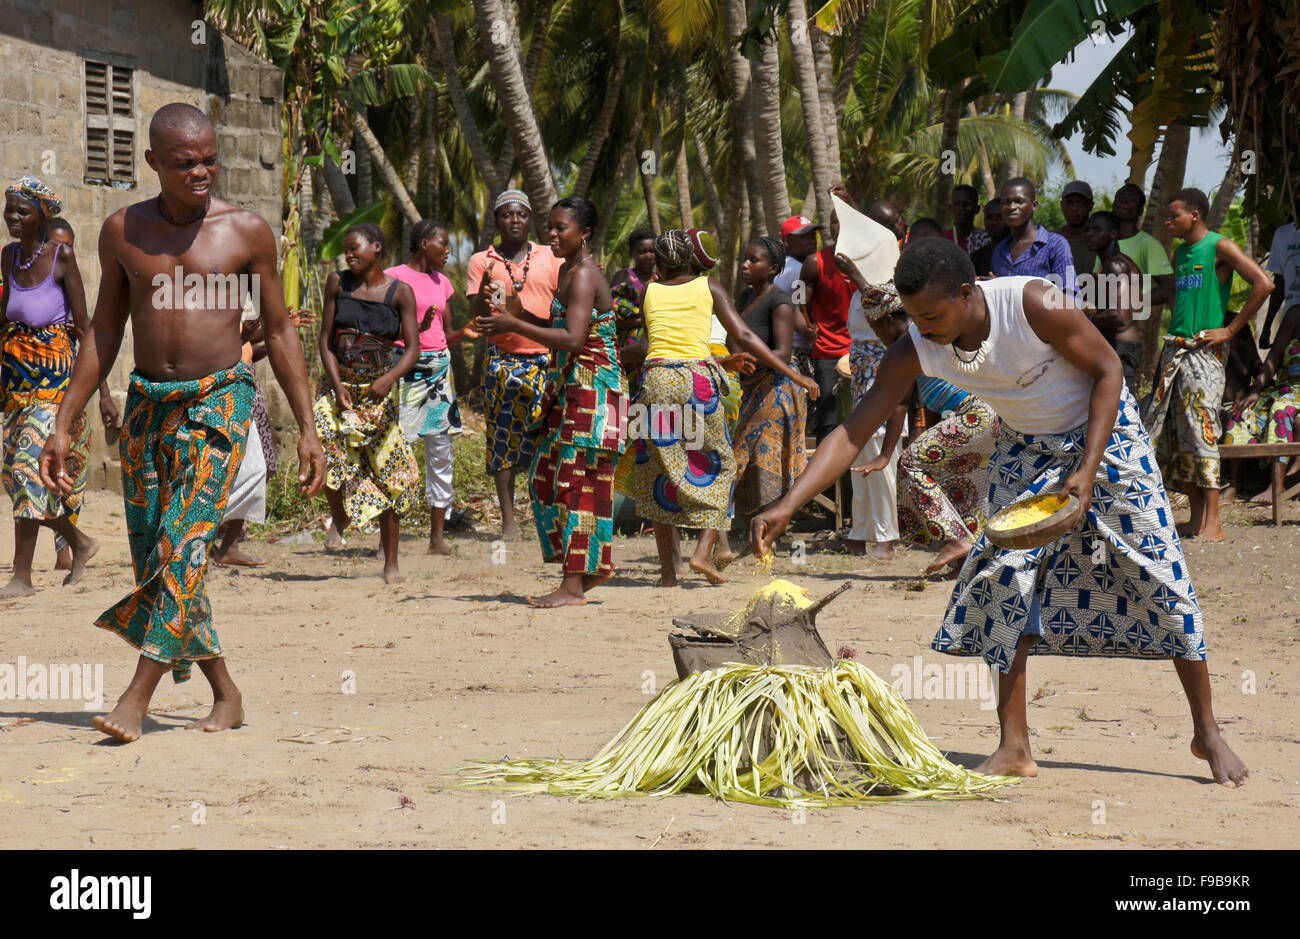 Man making offering to little spirit in Zangbeto ceremony, Heve-Grand Popo village, Benin Stock Photo